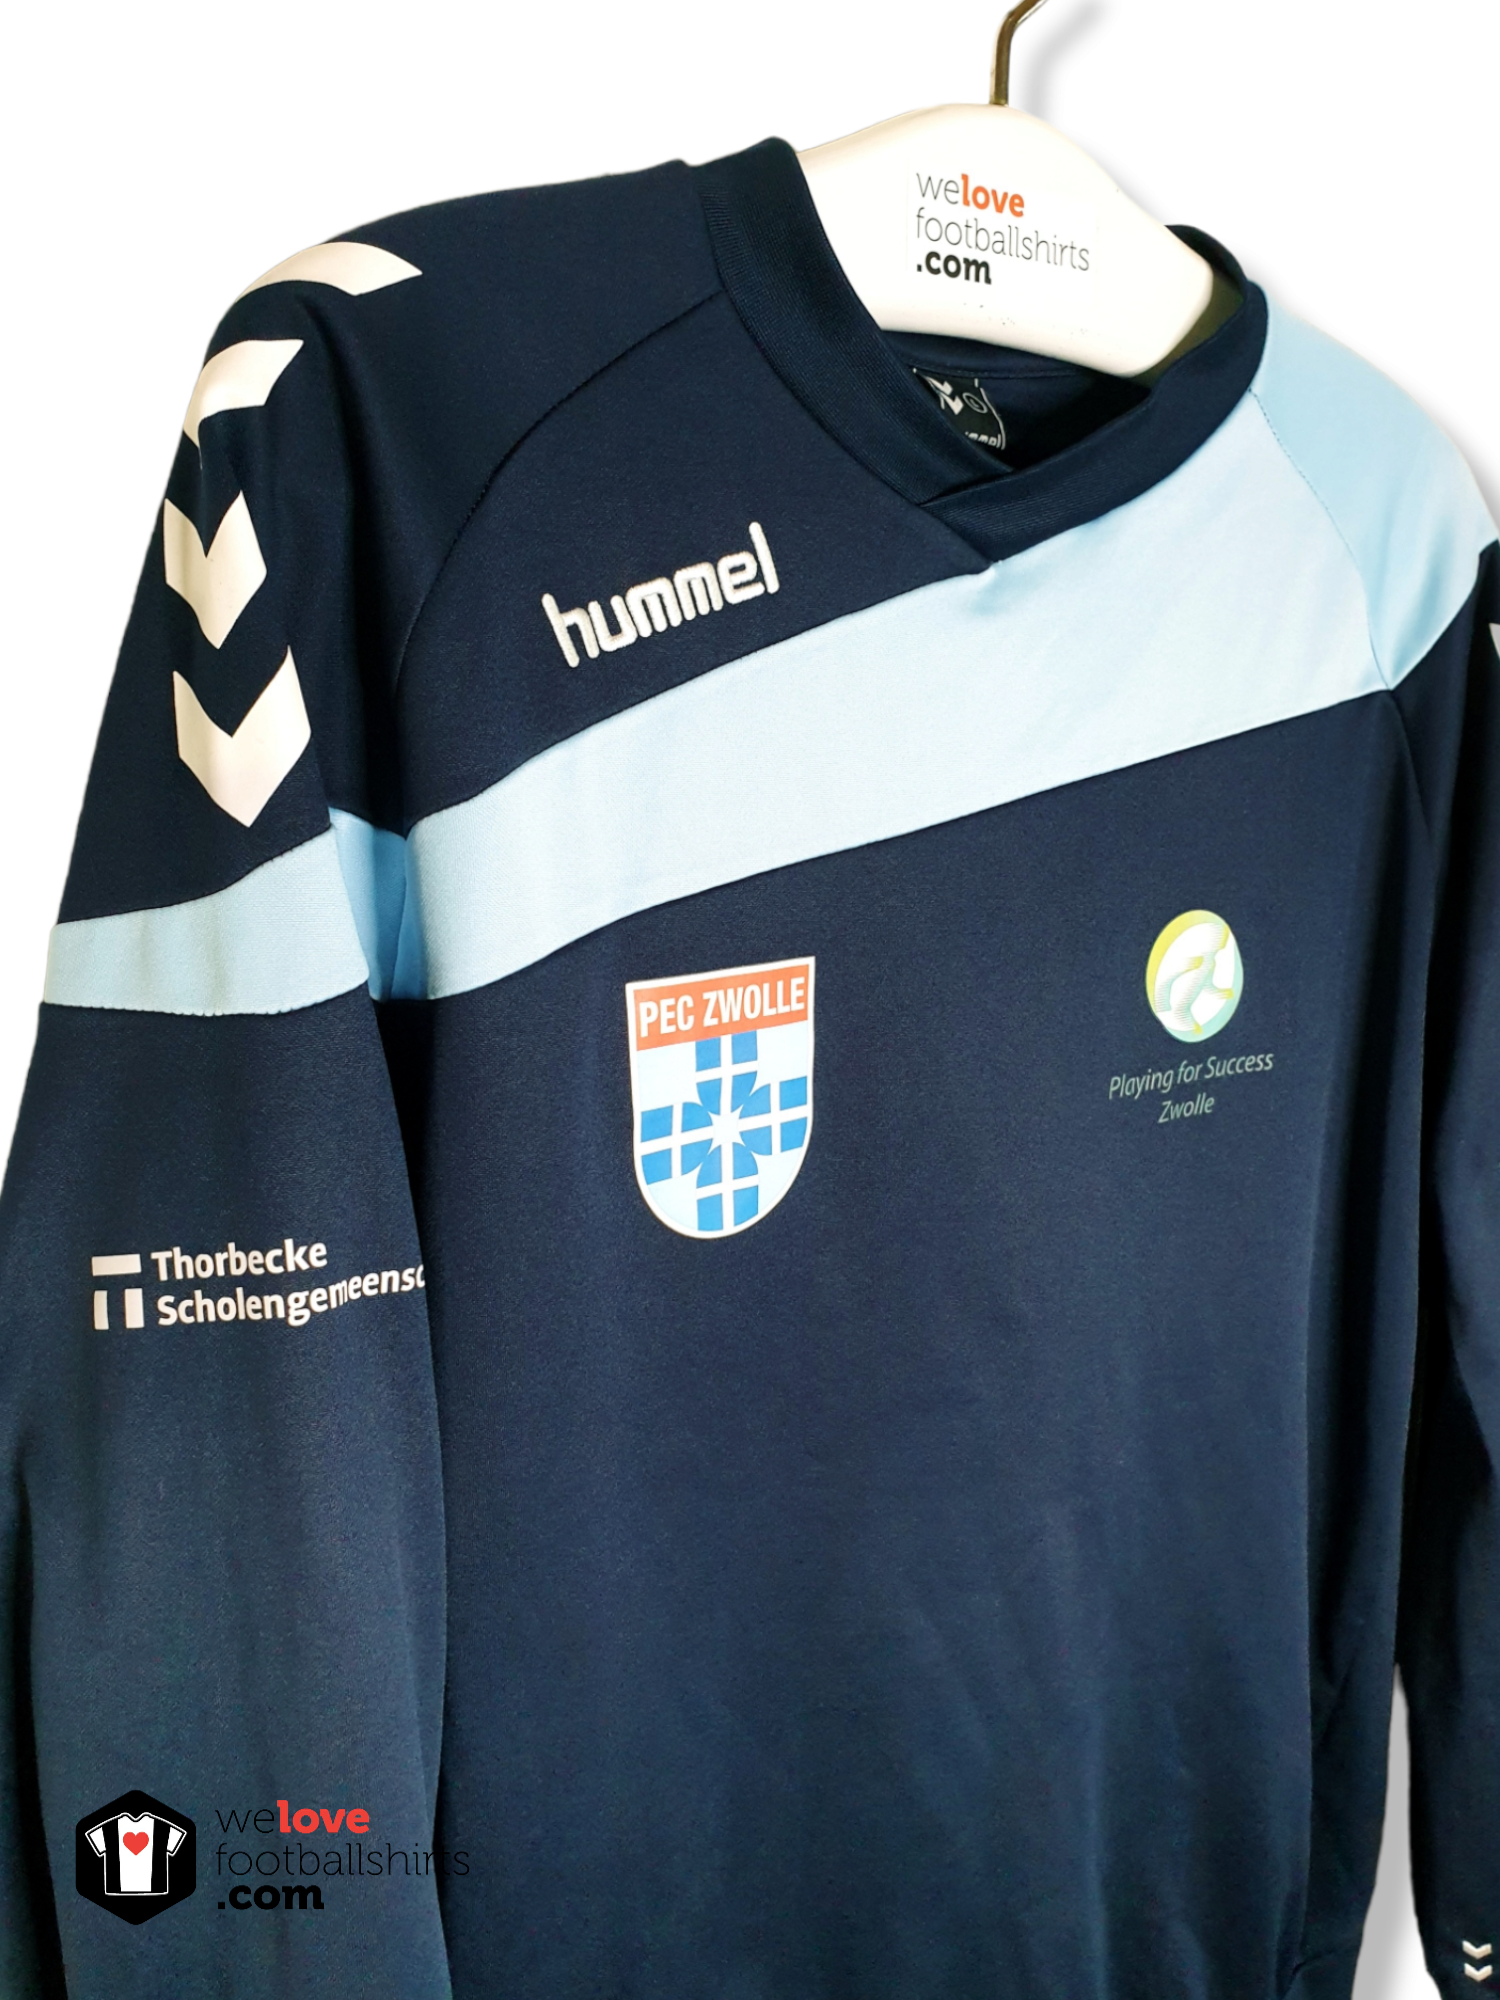 Lenen hout Afname Hummel voetbal sweater FC Zwolle - Welovefootballshirts.com